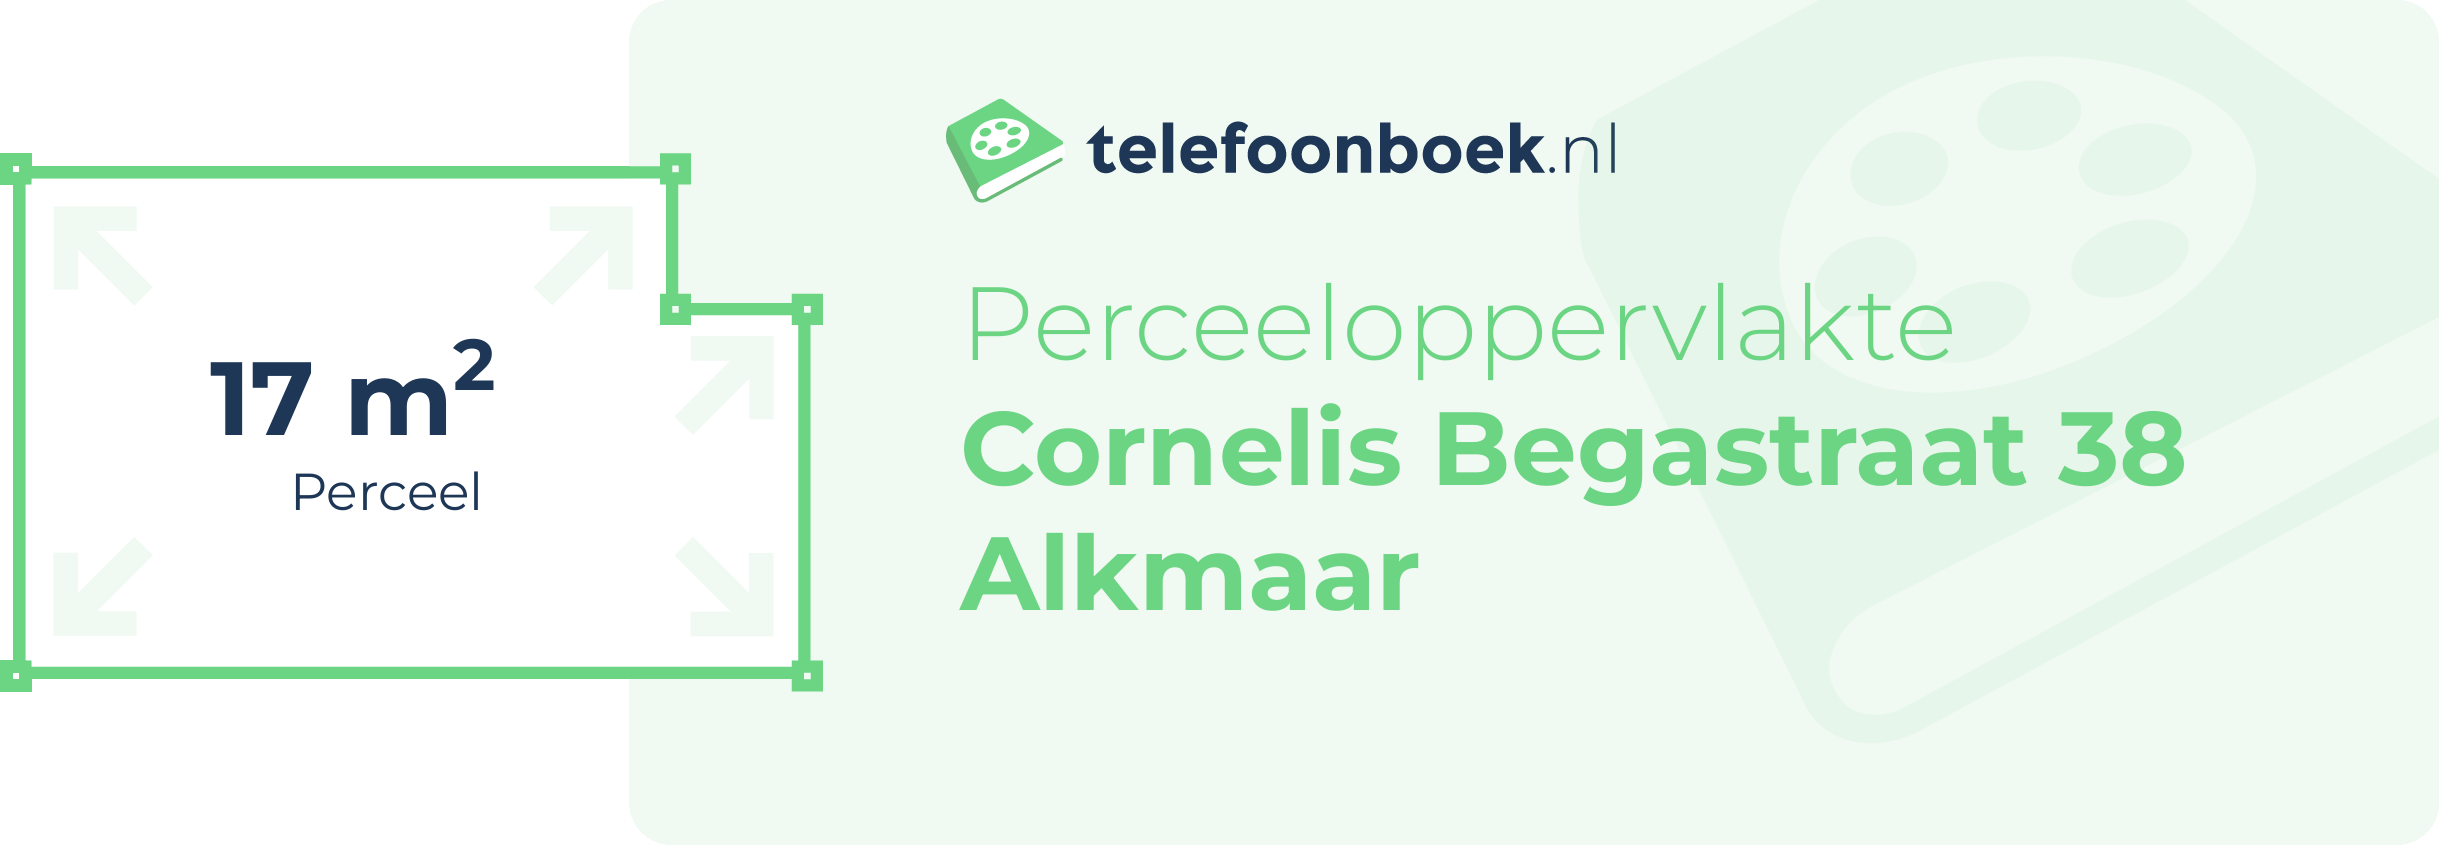 Perceeloppervlakte Cornelis Begastraat 38 Alkmaar